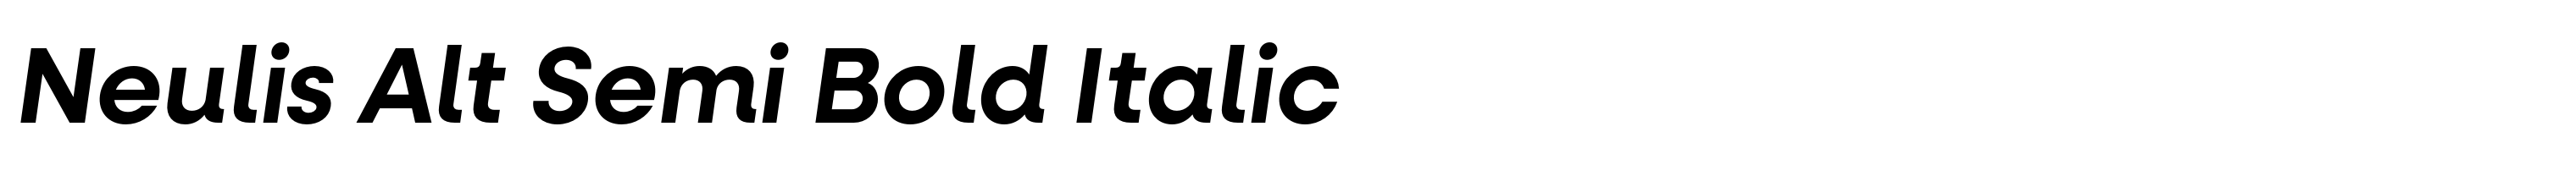 Neulis Alt Semi Bold Italic